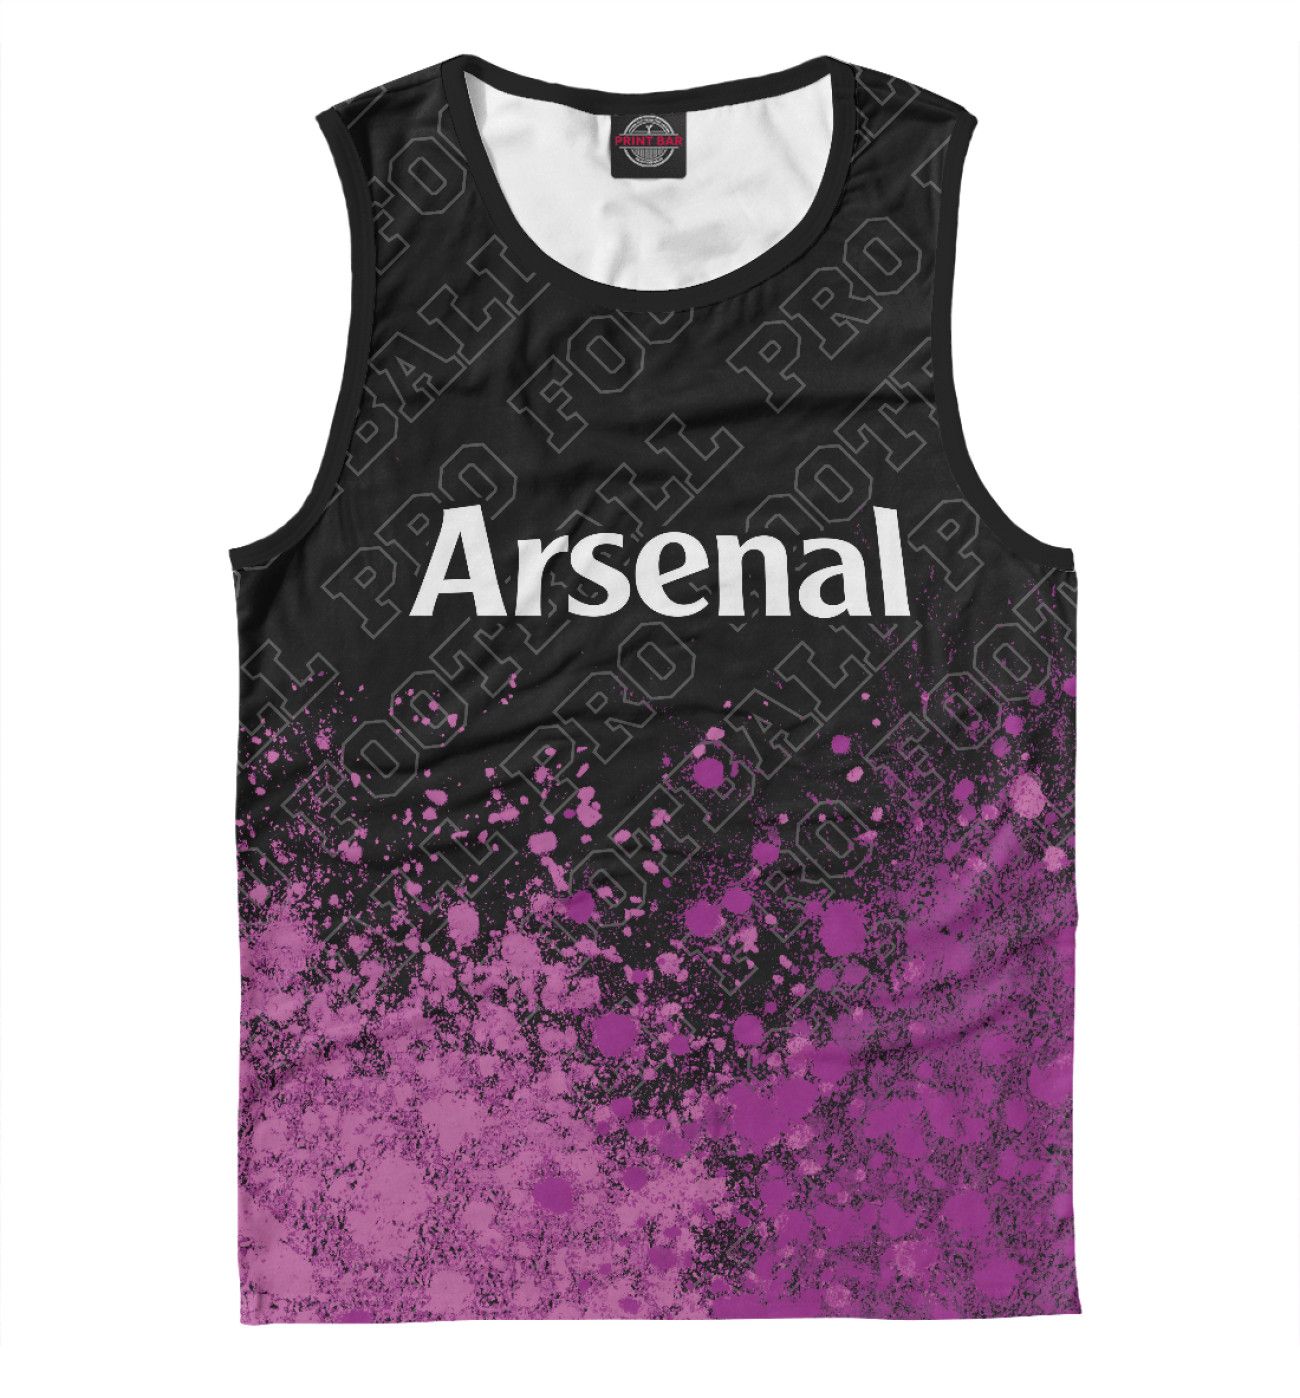 Мужская Майка Arsenal Pro Football (color splash), артикул: ARS-755668-may-2